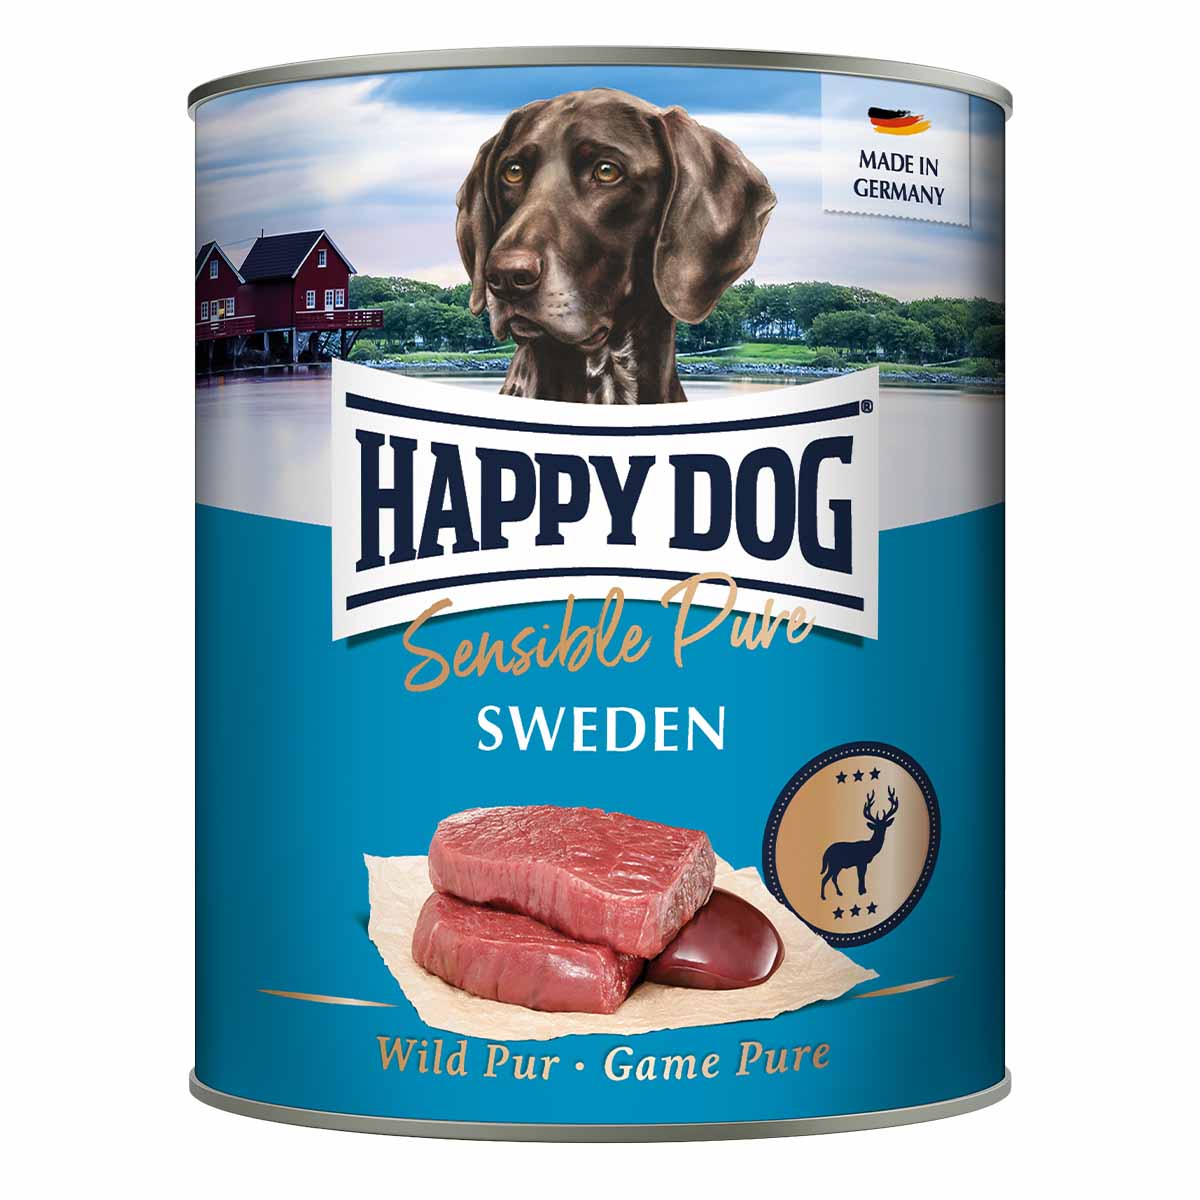 Happy Dog Sensible Pure Sweden (Wild) 12x800g